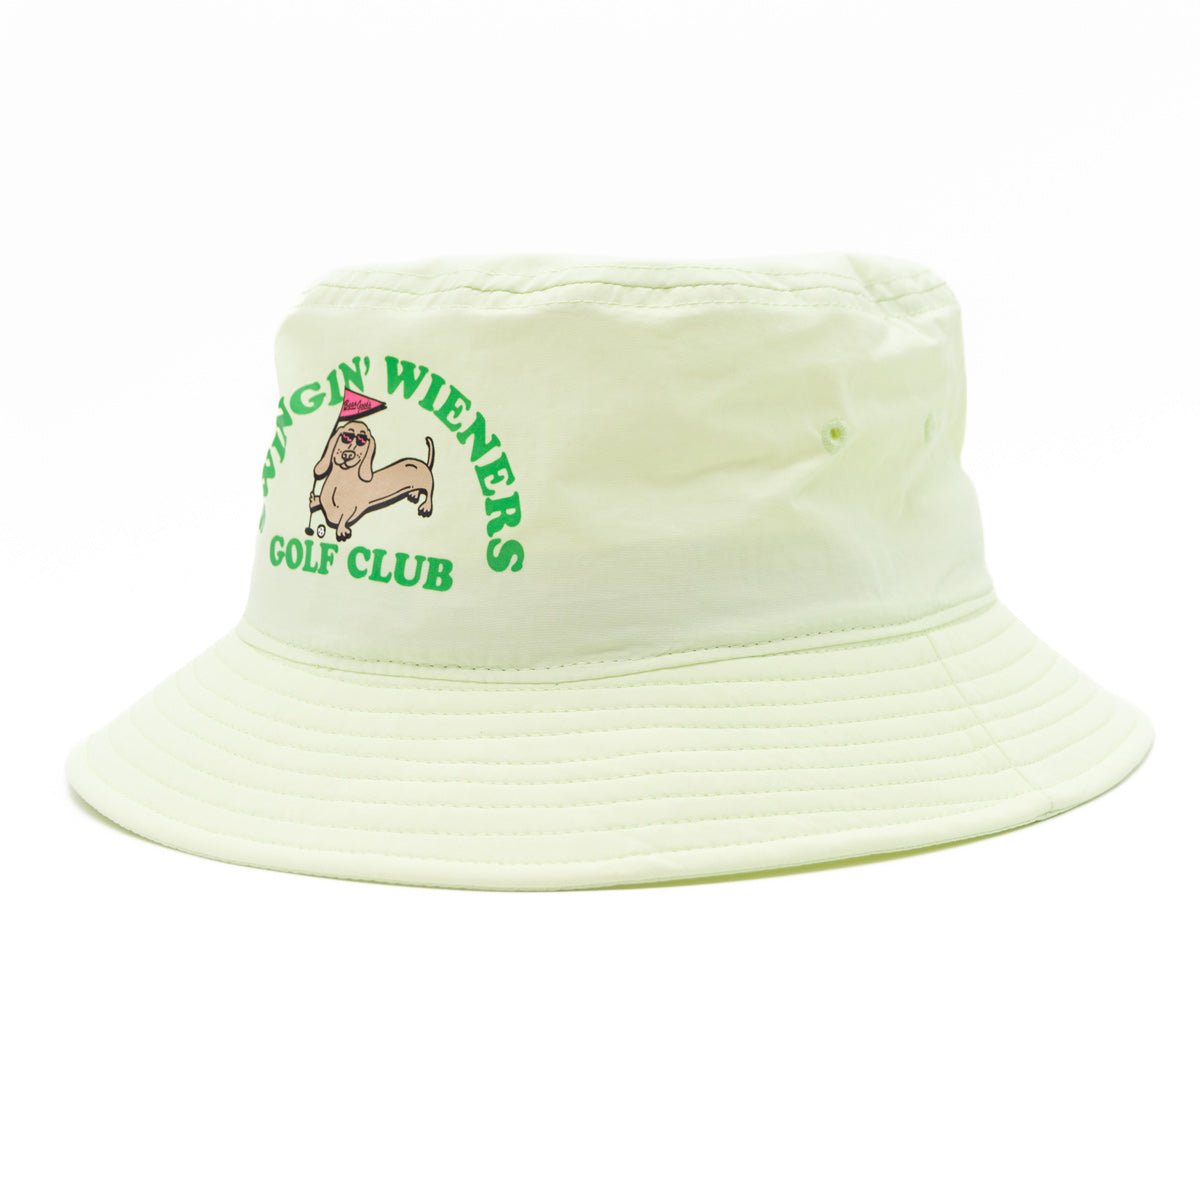 swinging wieners golf club bucket hat - bean goods